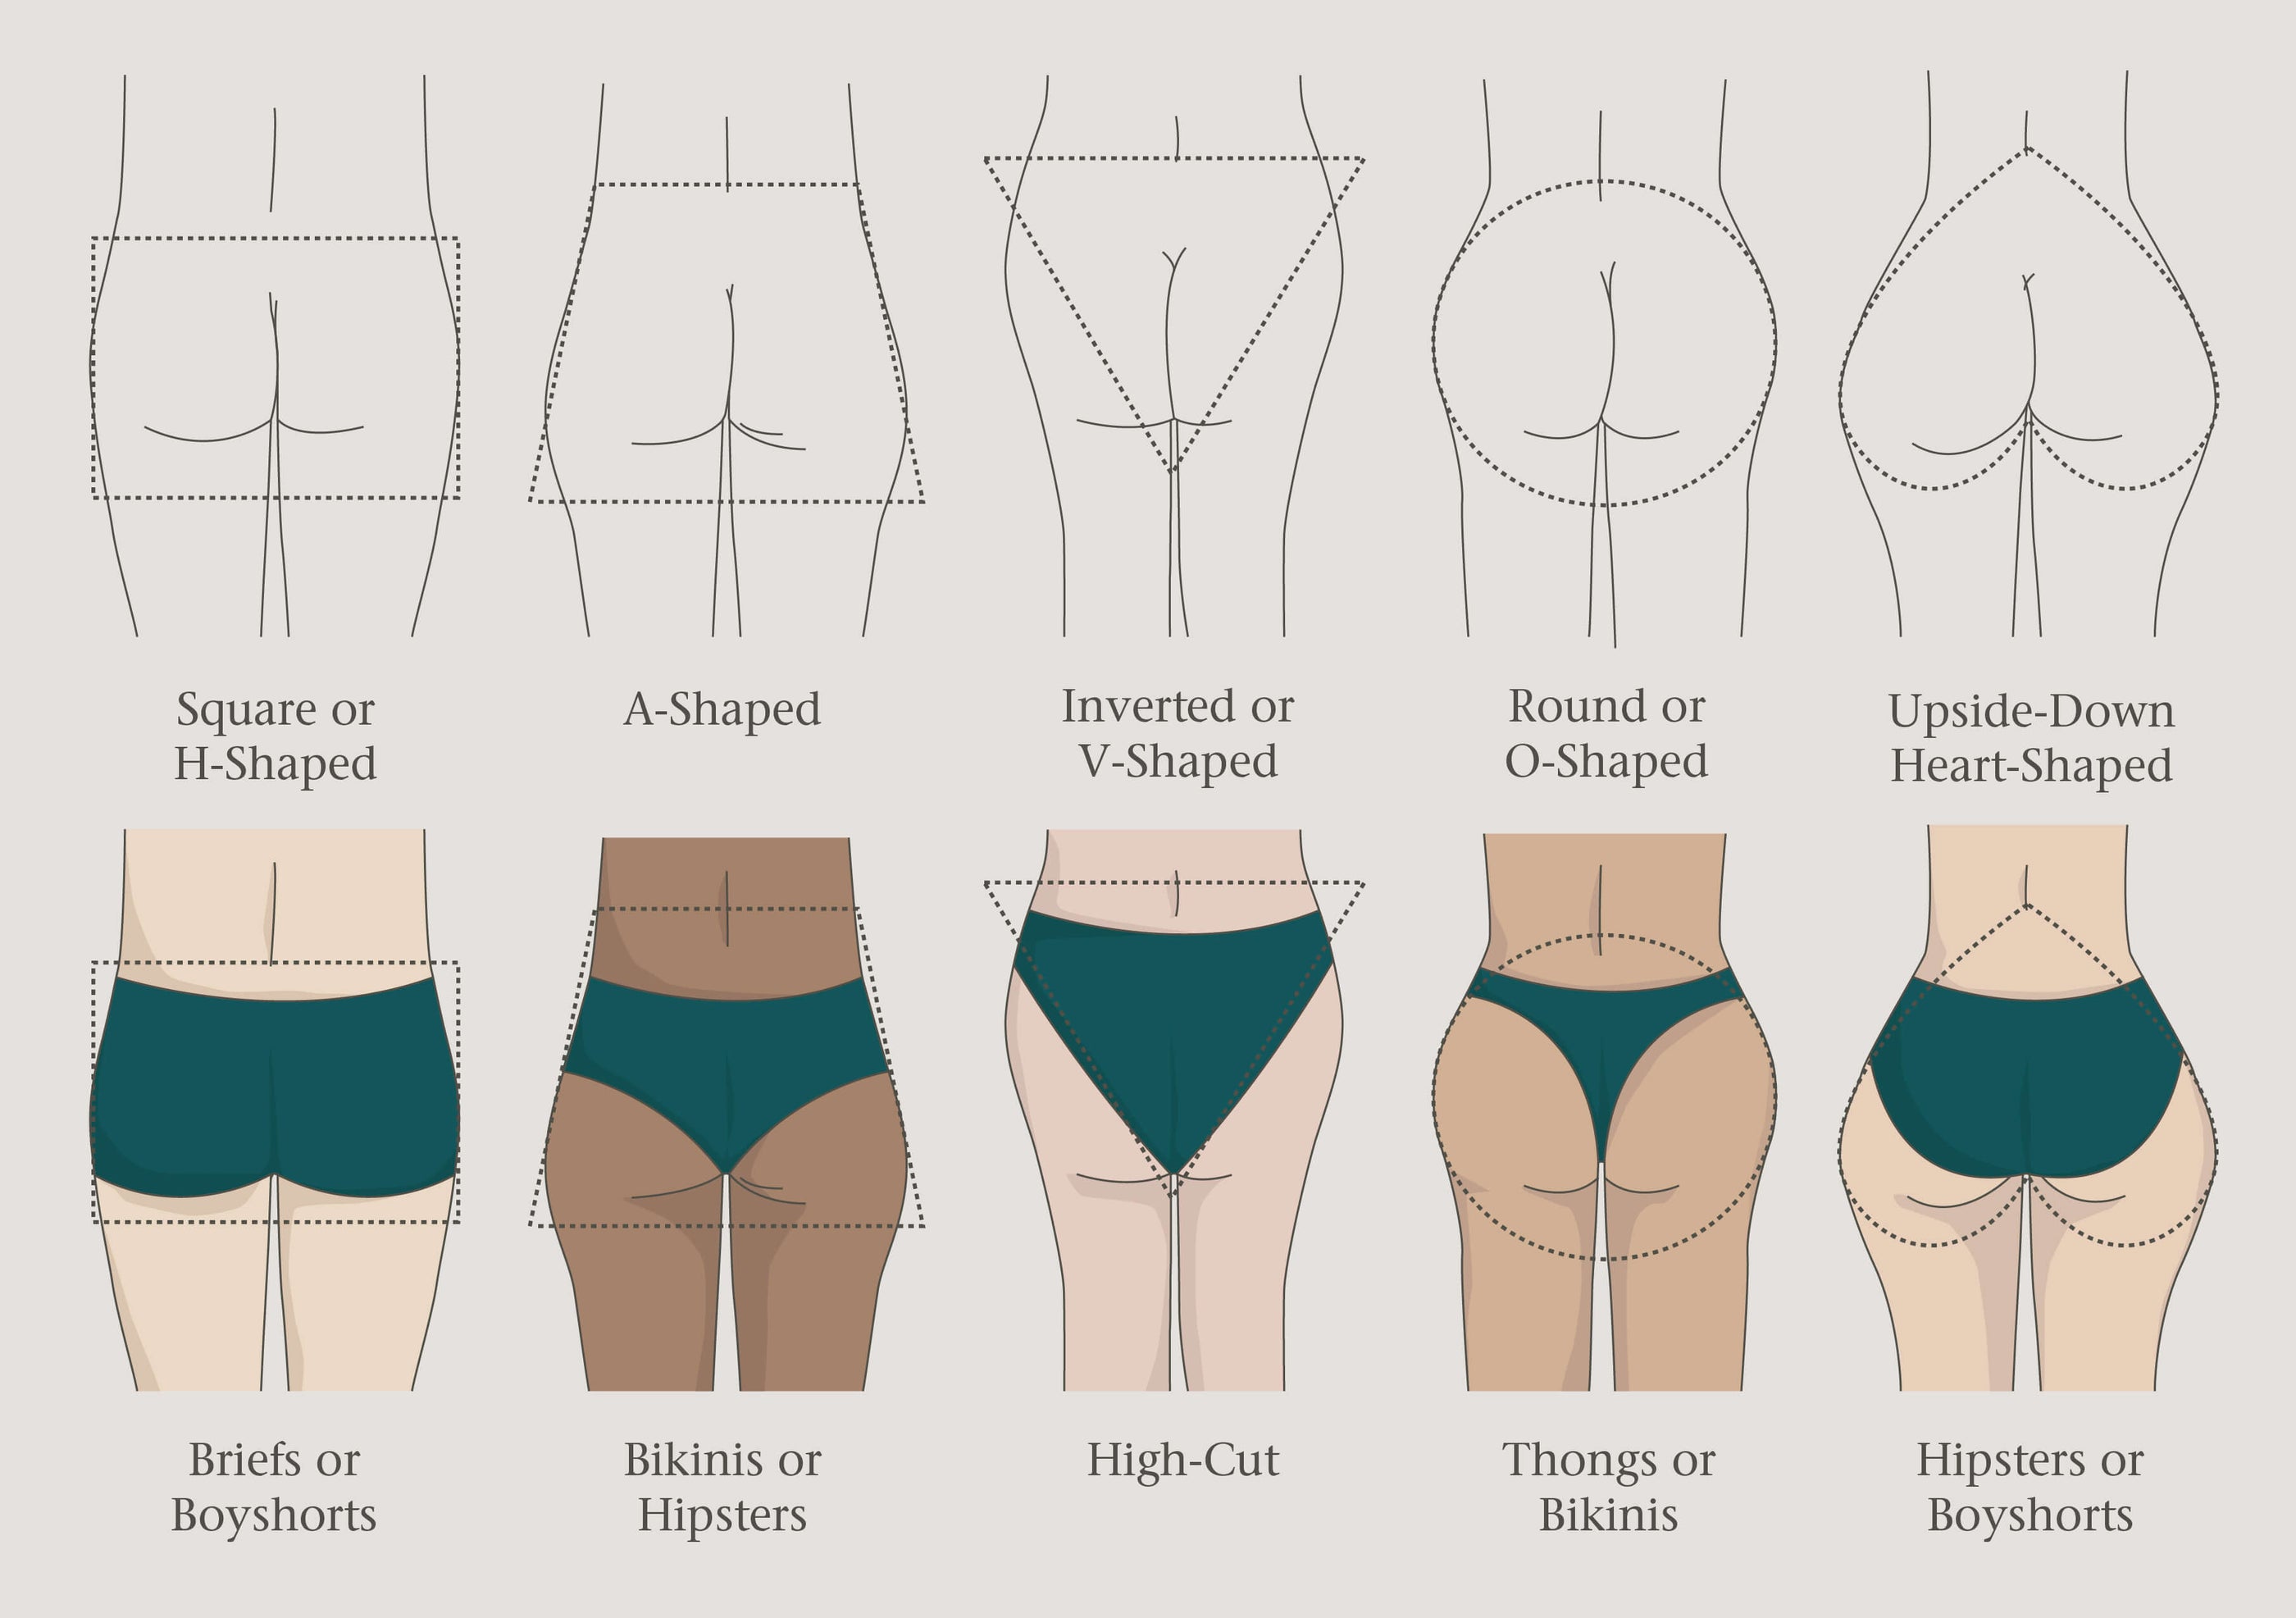 Show me your favourite underwear girls ;)